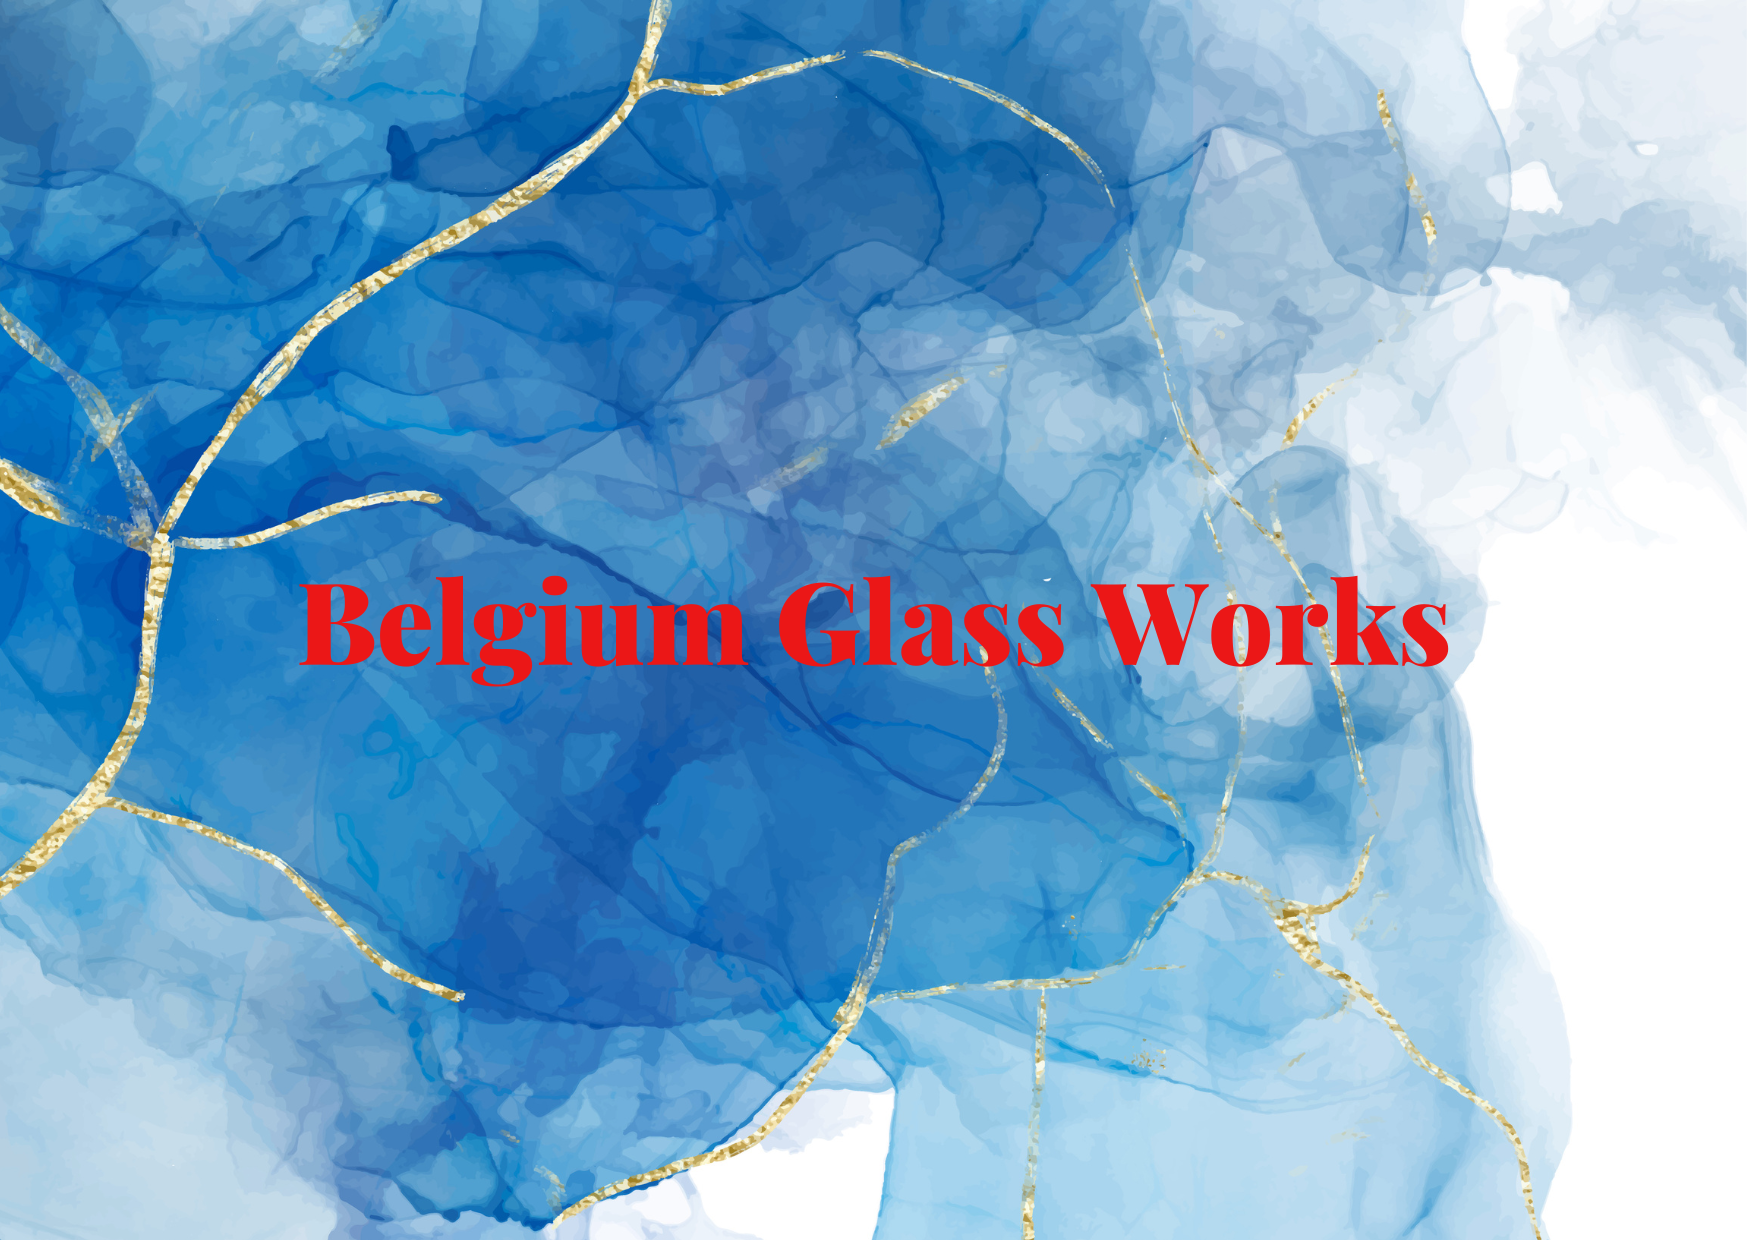 Belgium Glass Works